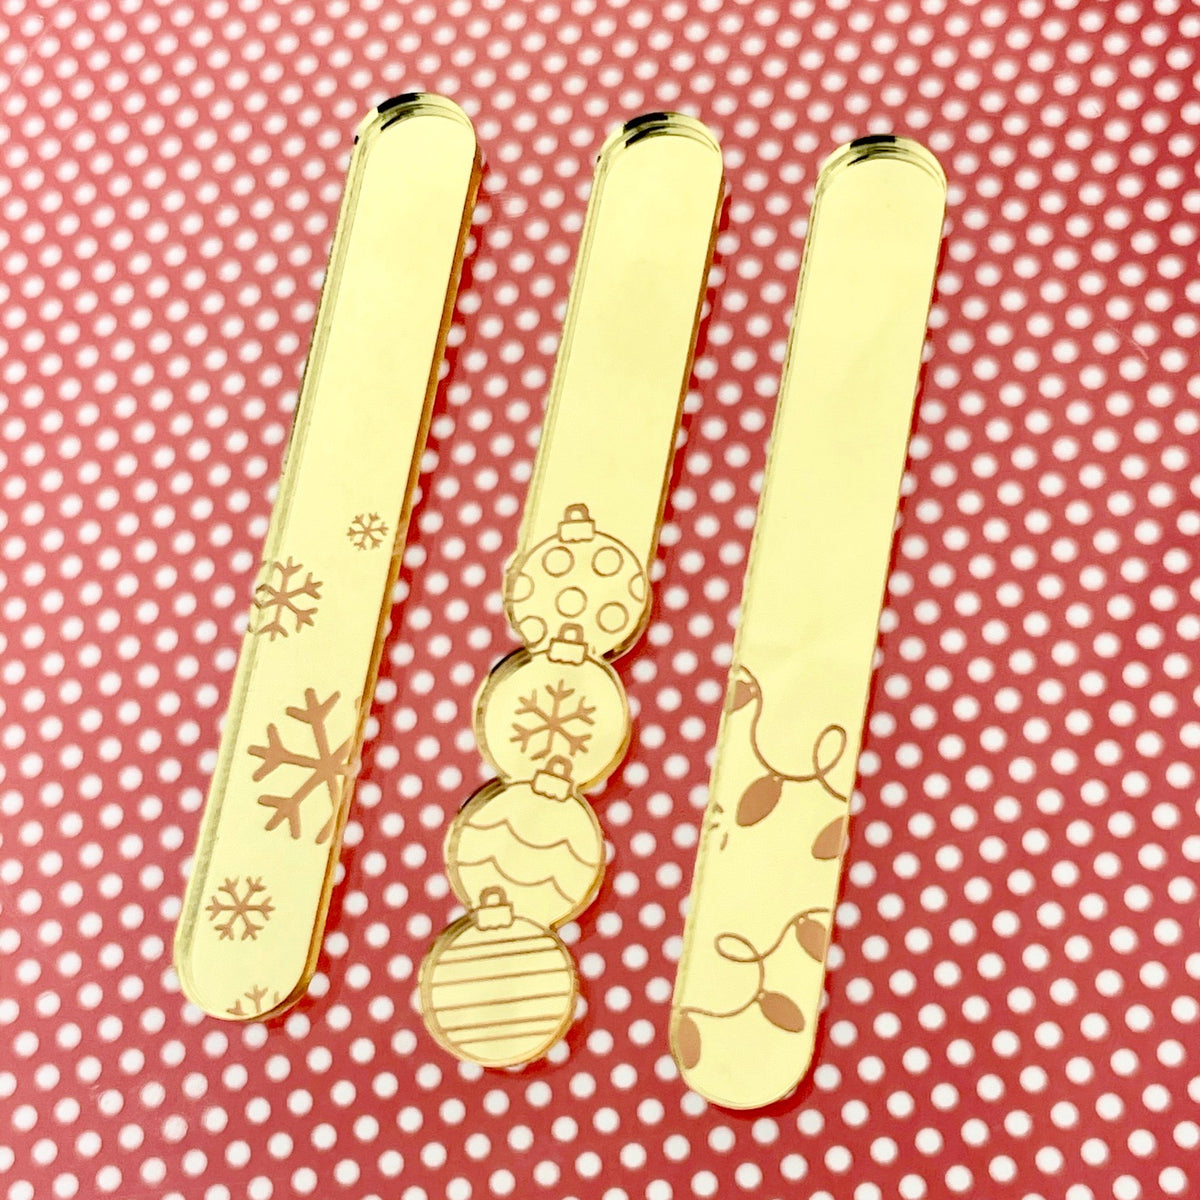 Christmas Novelty Acrylic Cakesicle Popsicle Sticks in Mini and